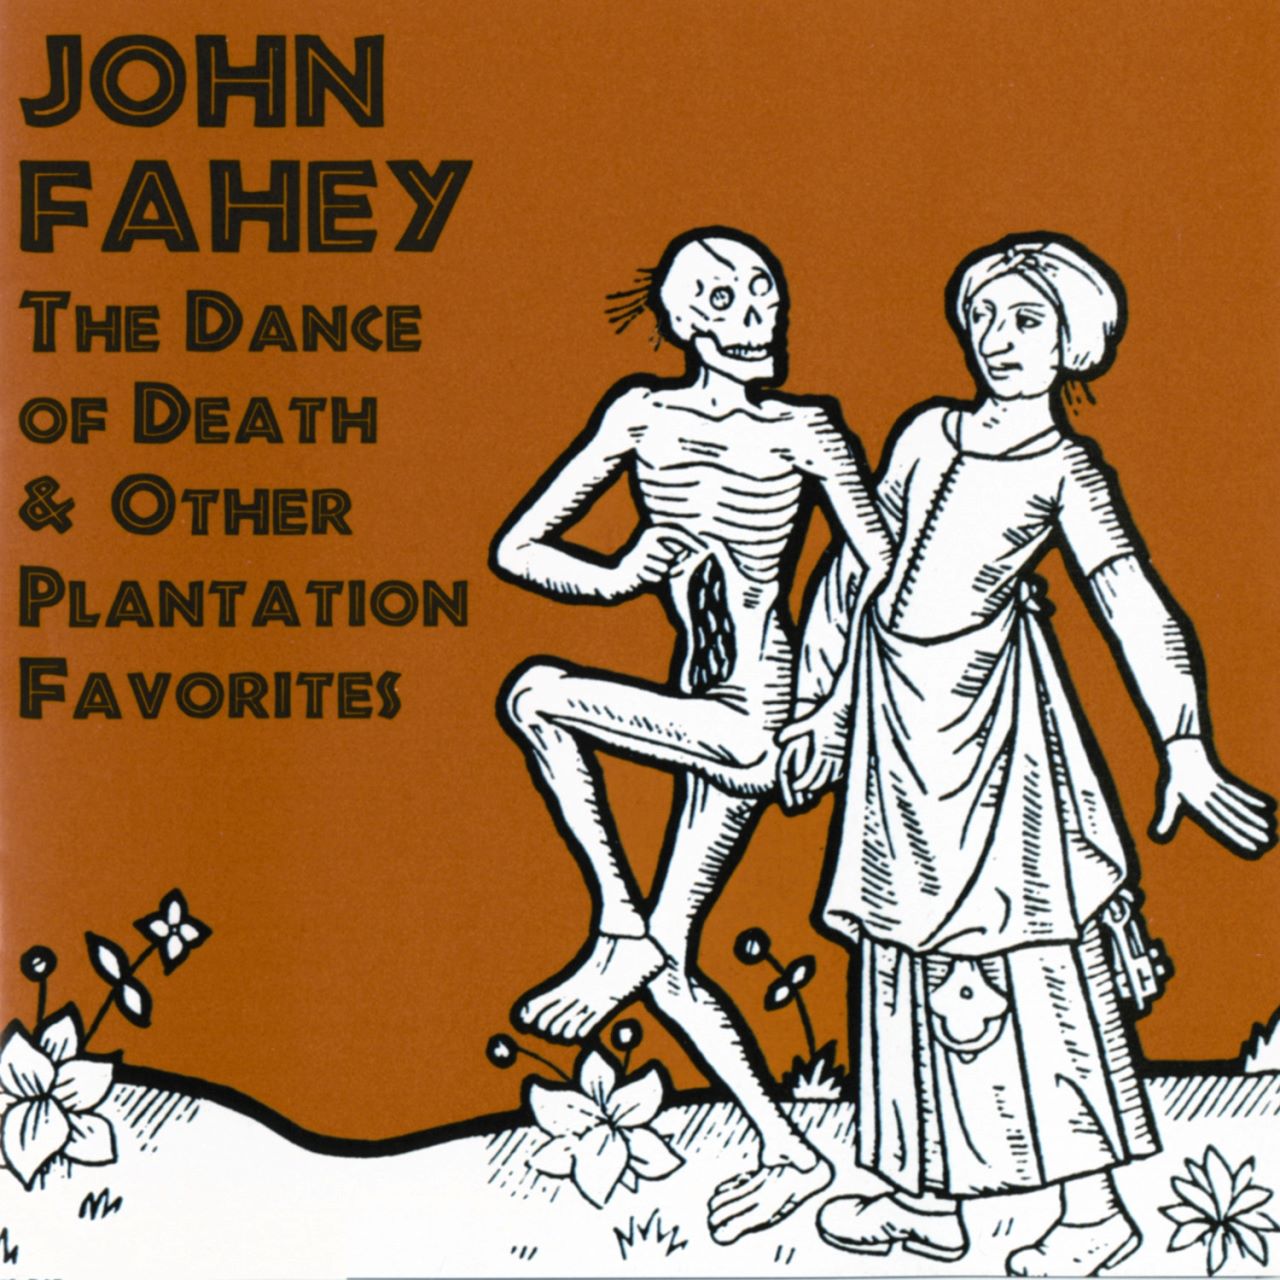 John Fahey - The Dance Of Death & Other Plantation Favorites covewr album